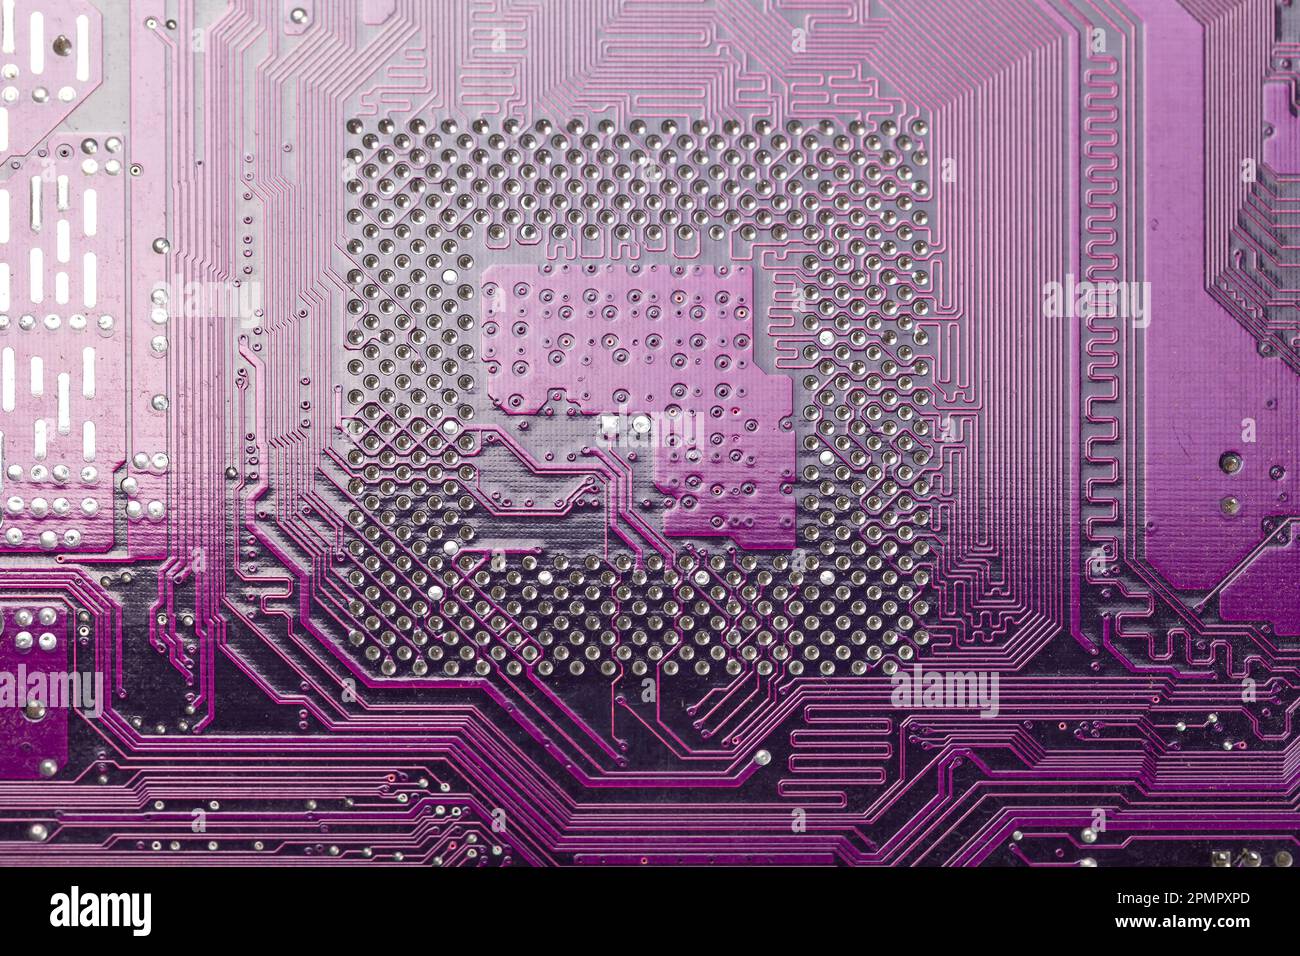 Fond de carte de circuit imprimé. Gros plan d'une carte de circuit imprimé violet Banque D'Images